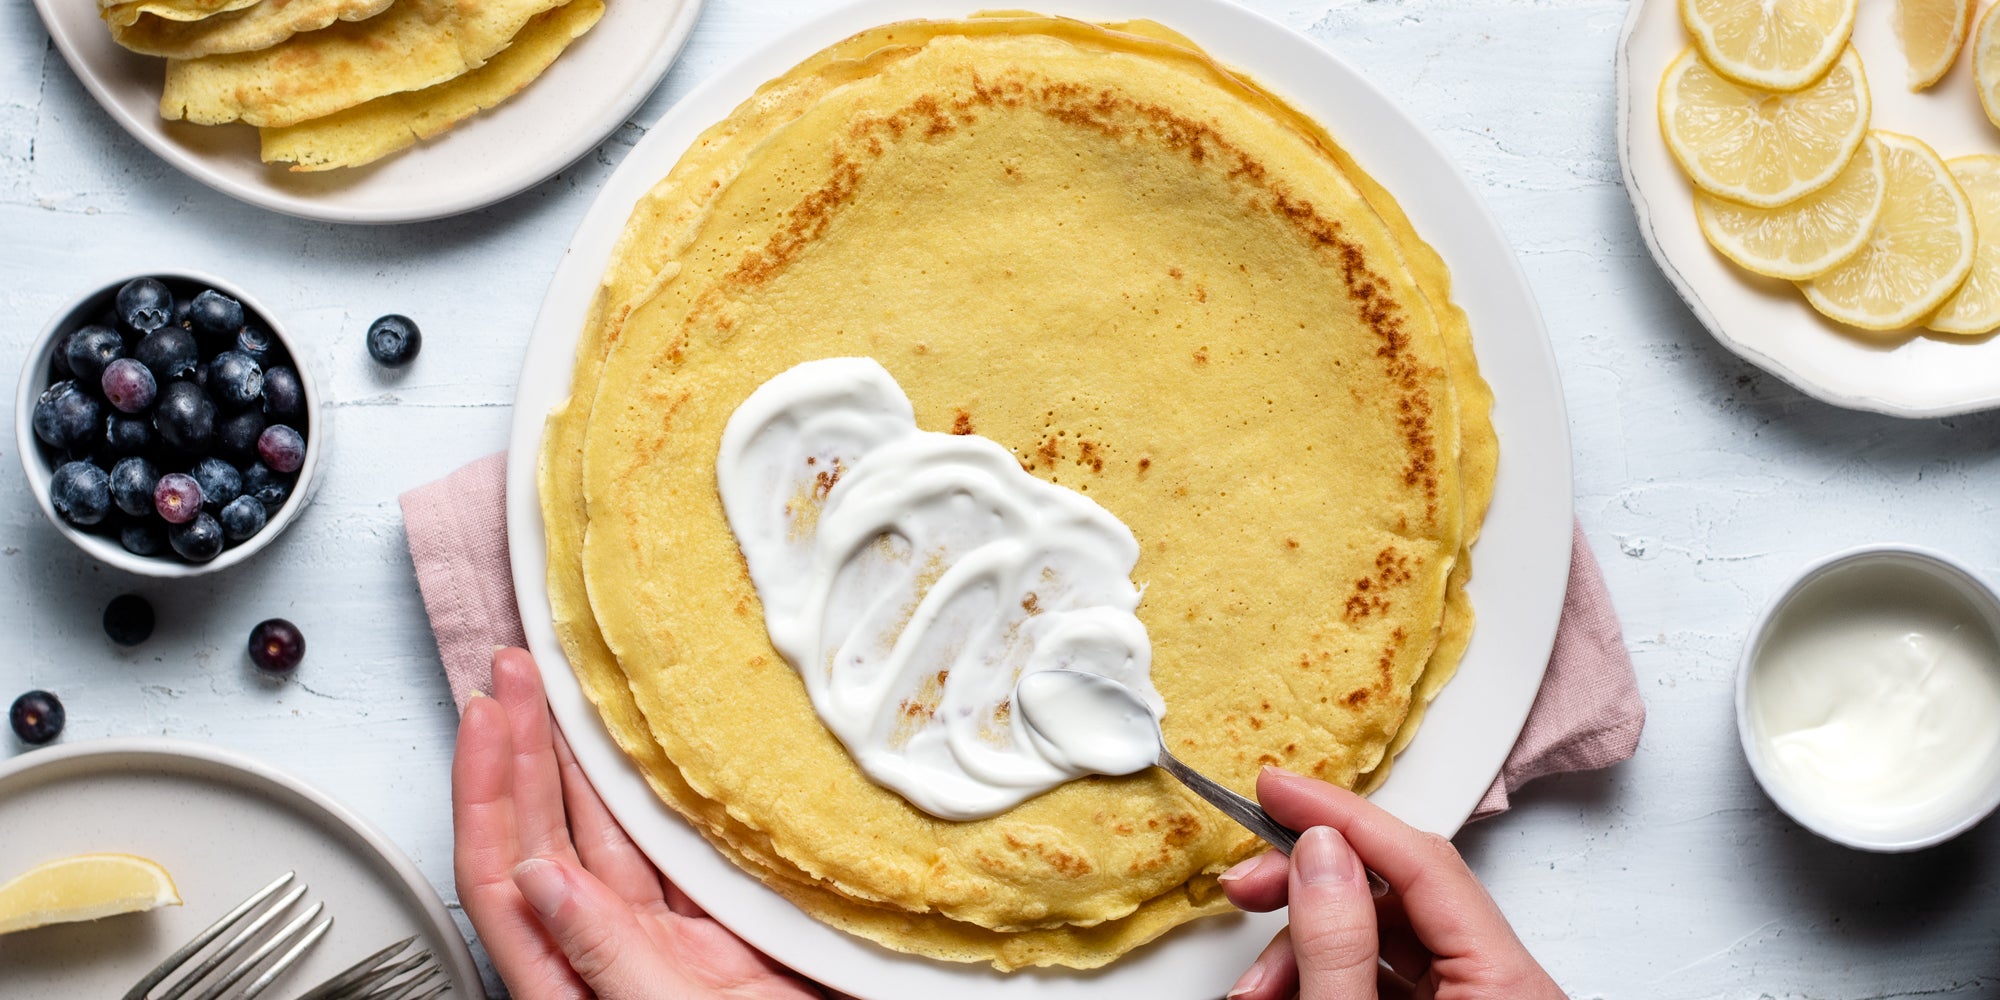 Top down view of yoghurt being smothered onto a turmeric and lemon pancake